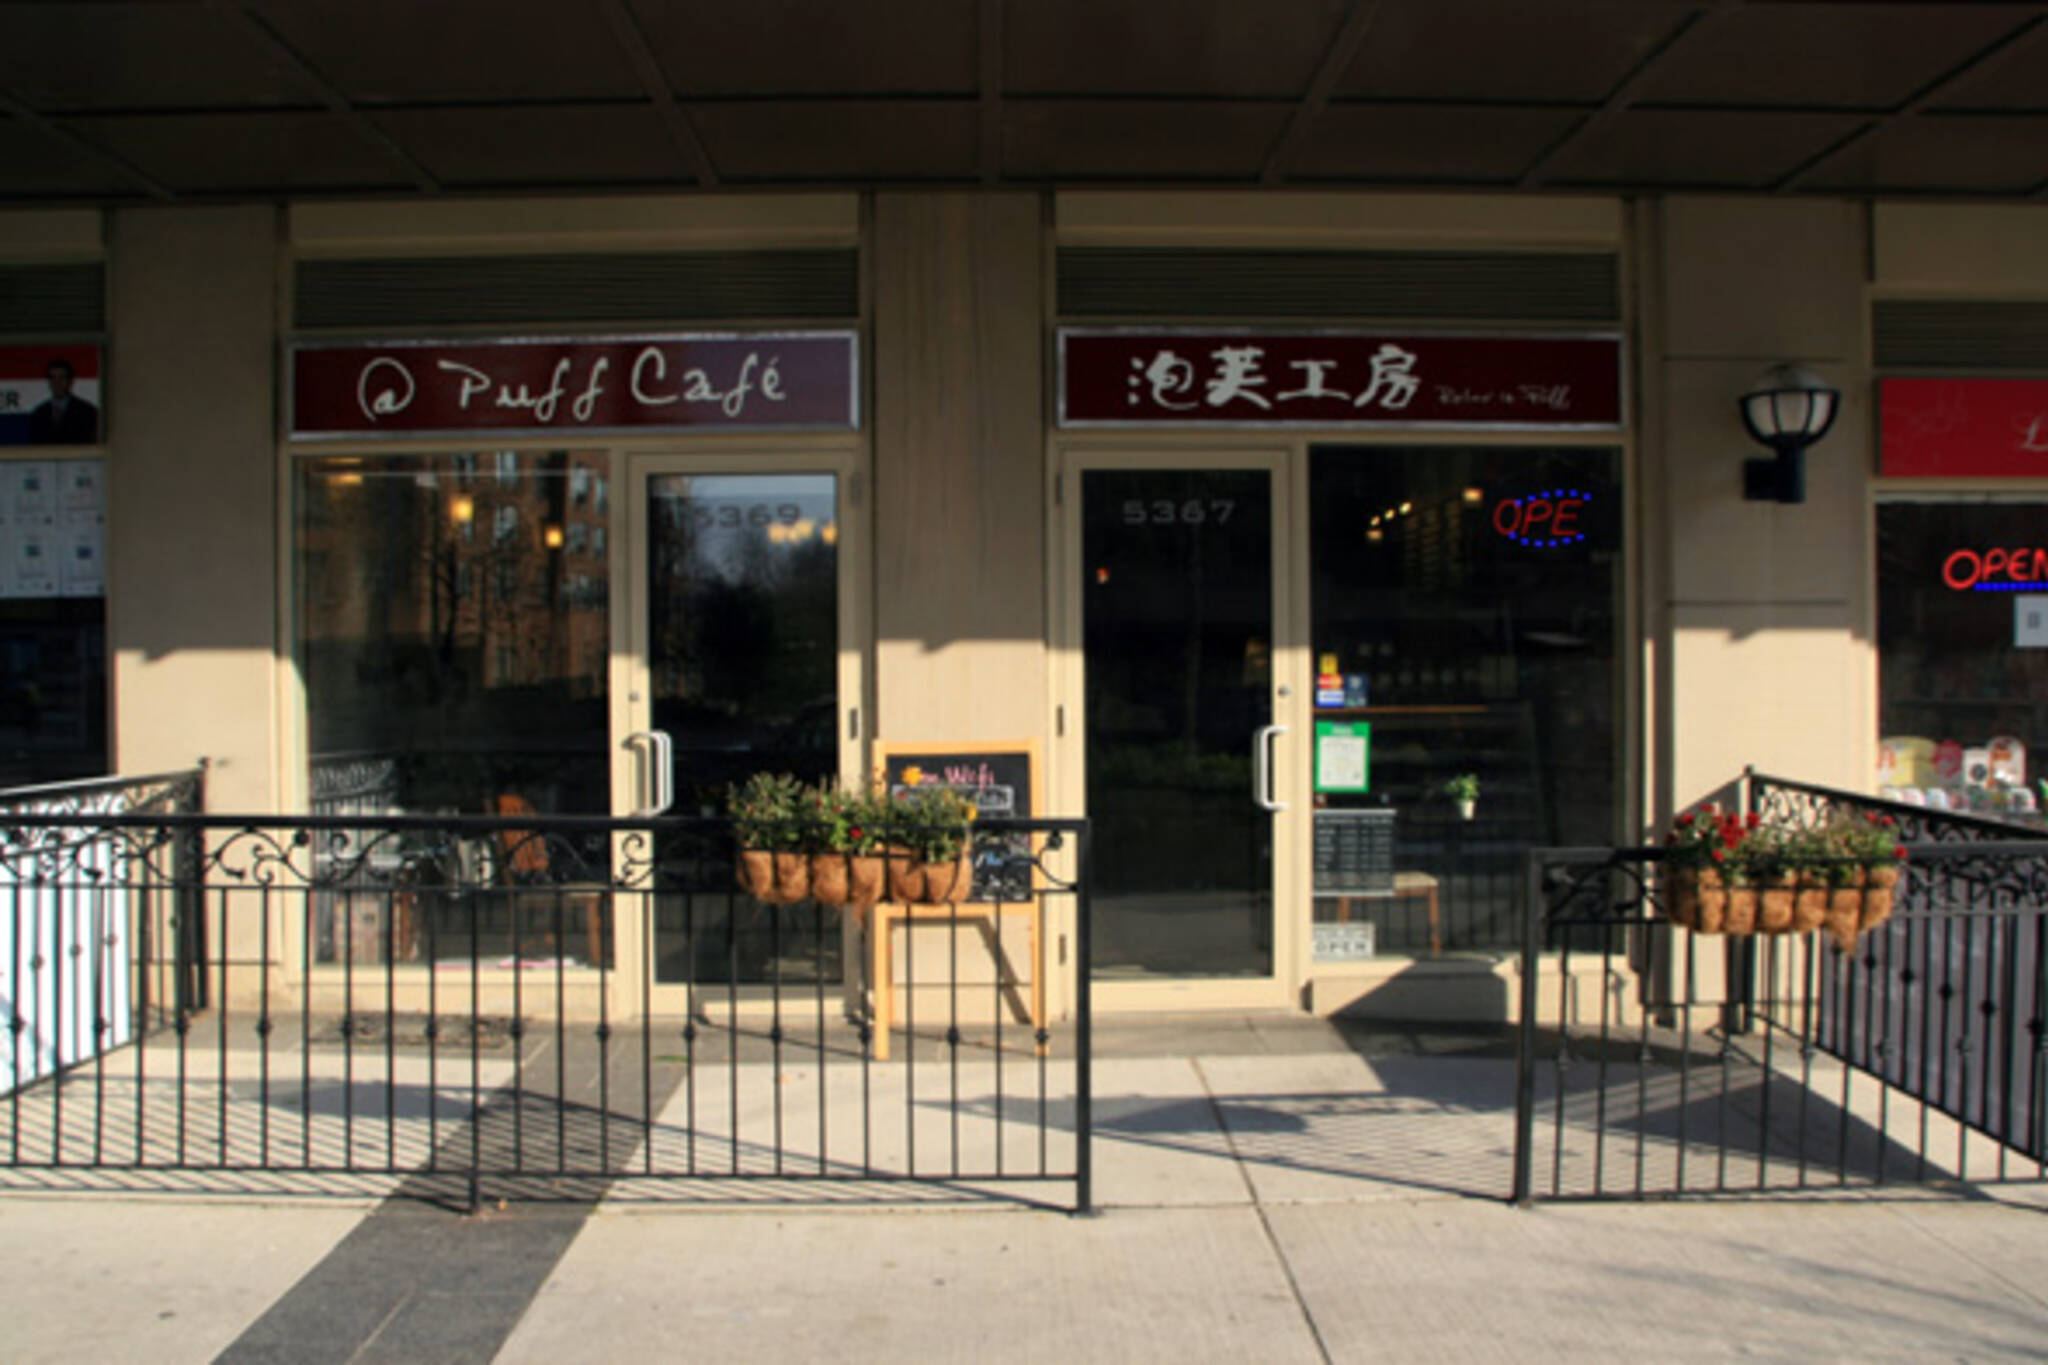 Puff Cafe Toronto